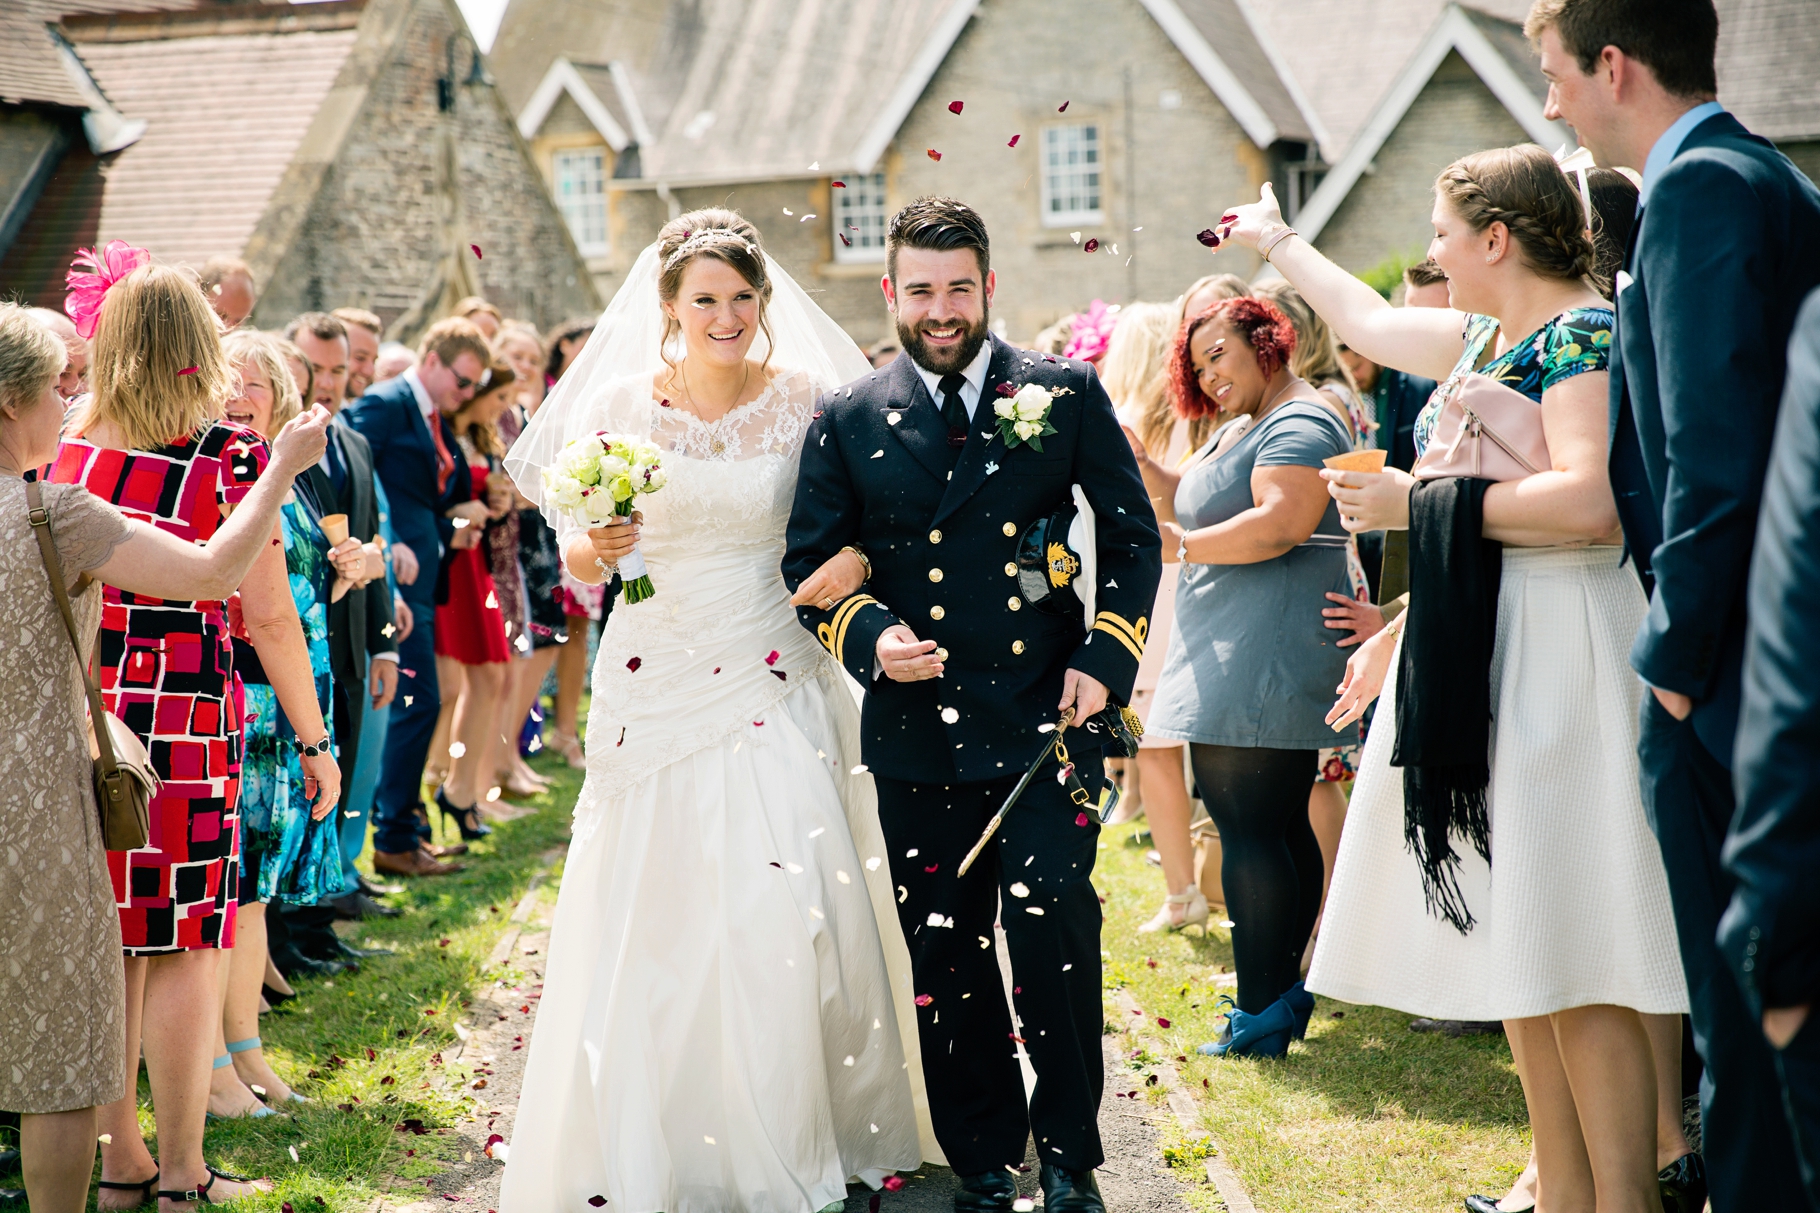 21-Confetti-Church-Ceremony-Bride-Groom-International-Photographer-England-Bristol-Wedding-Photography-by-Betty-Elaine